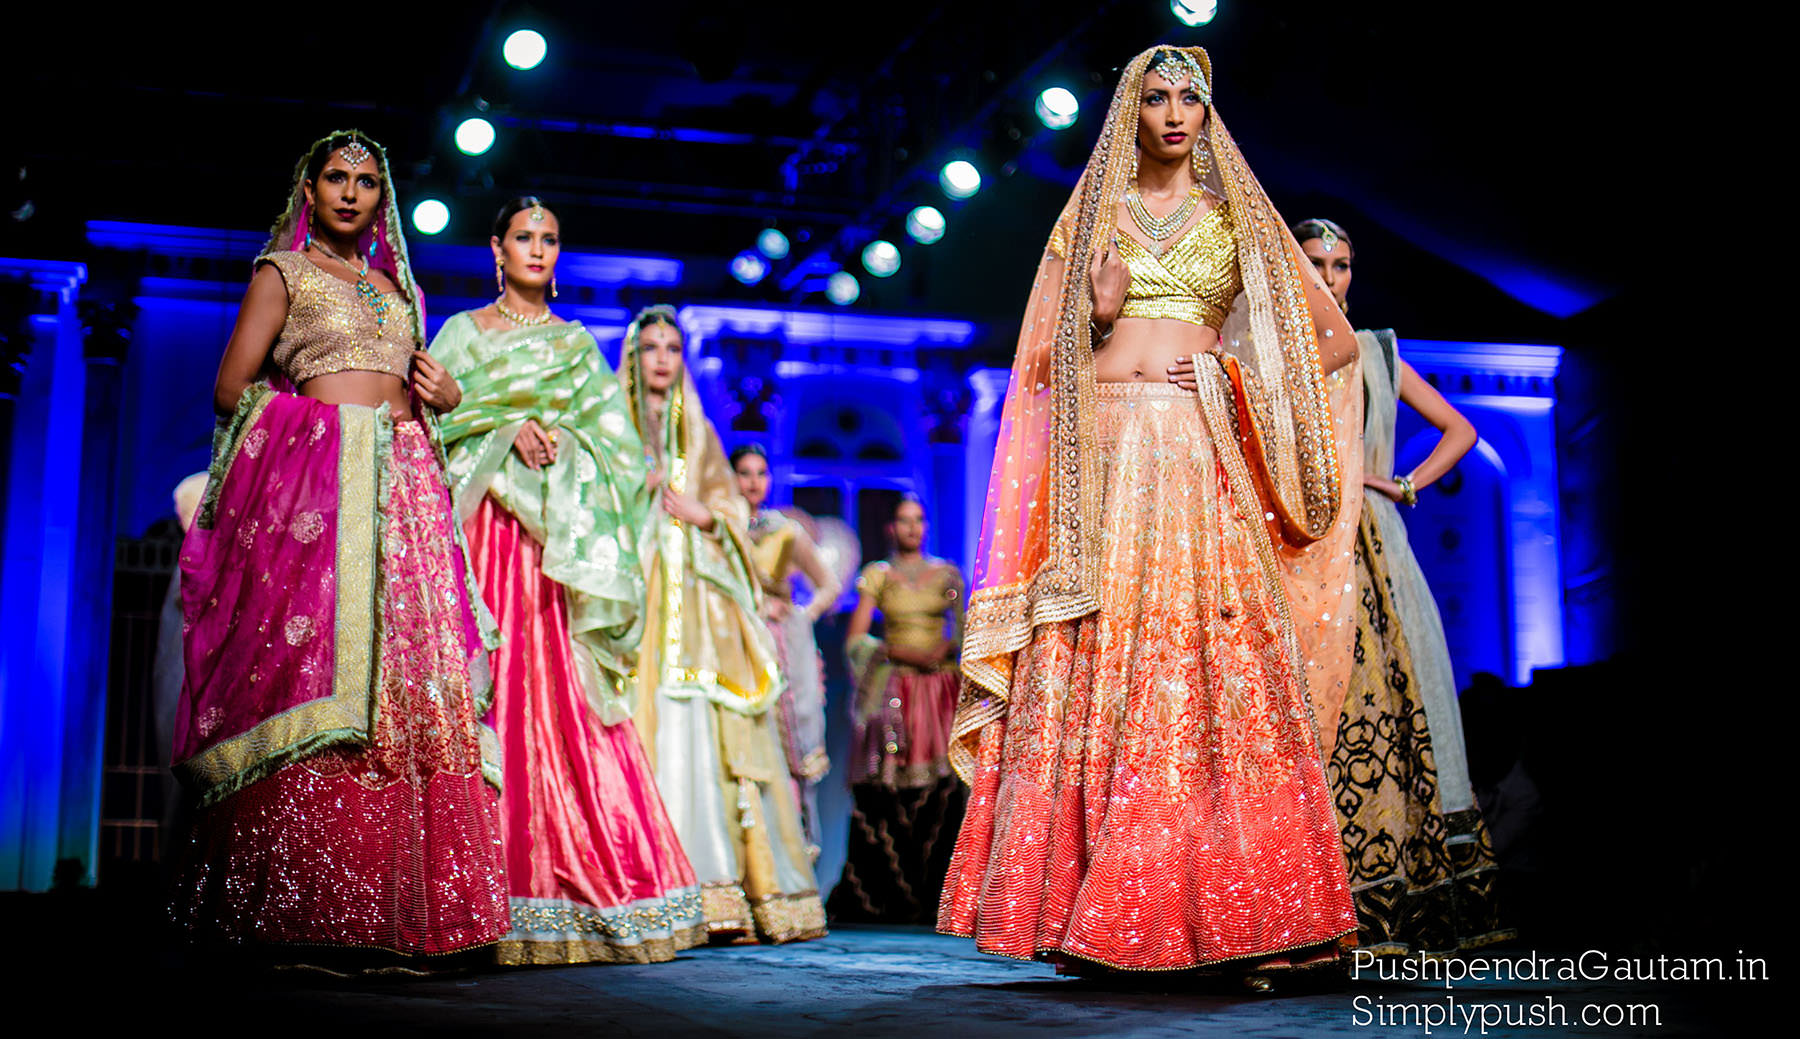 Meera-Muzaffar-Ali-pics-india-best-event-photographer-bmw-india-bridal-fashion-week-pushpendragautam-pics-event-photographer-india